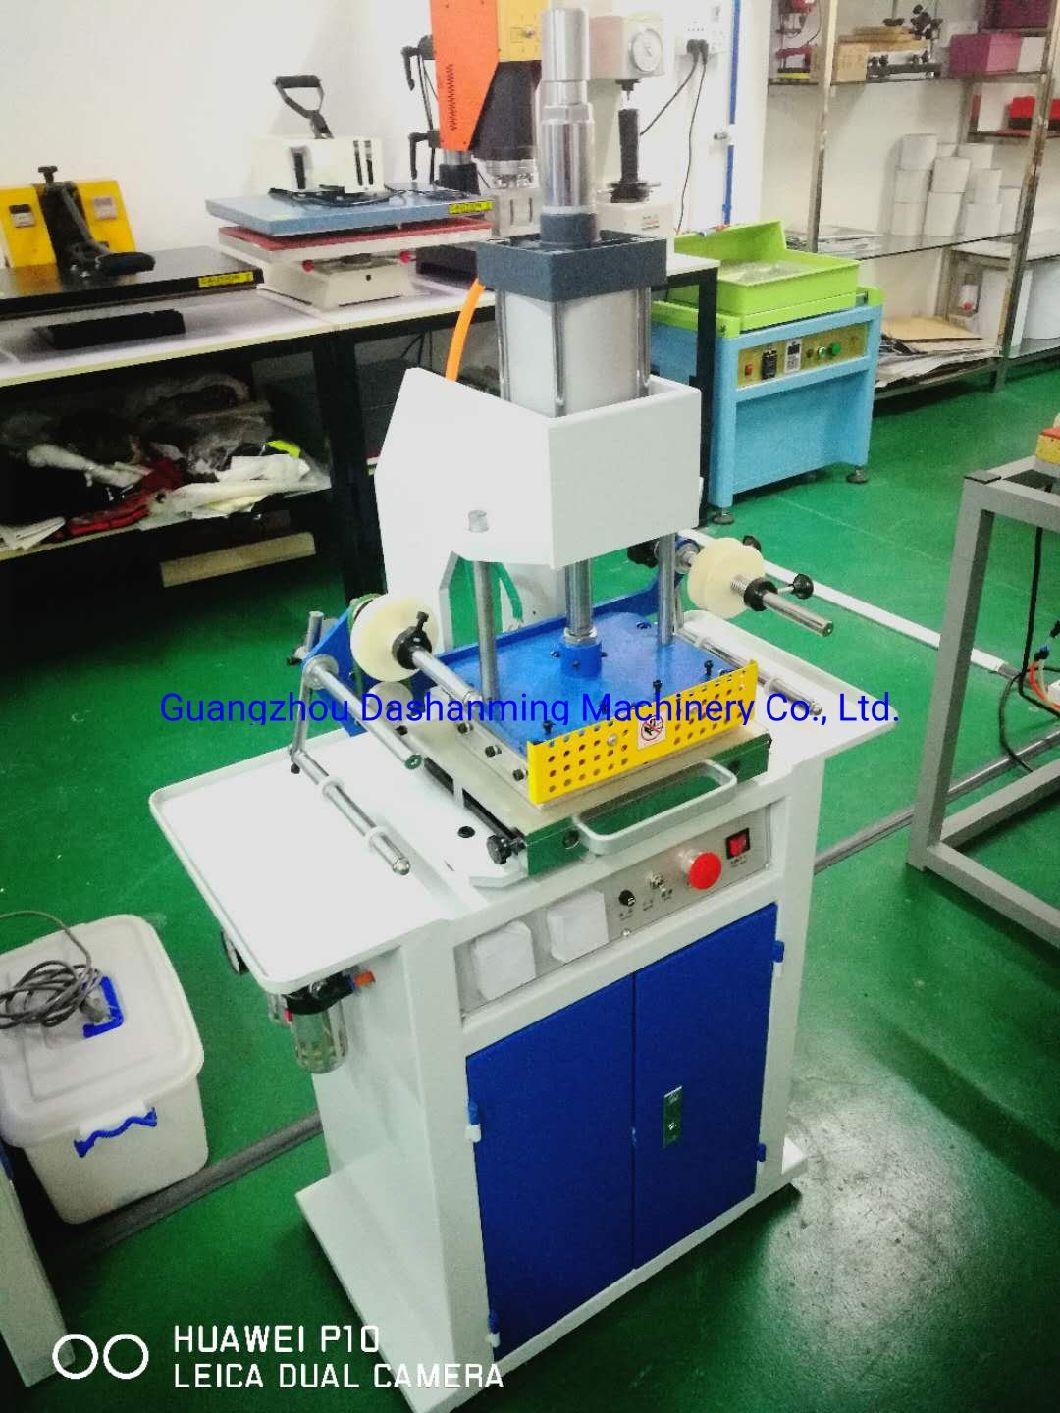 Hot Foil Stamping Machine Manufacturers